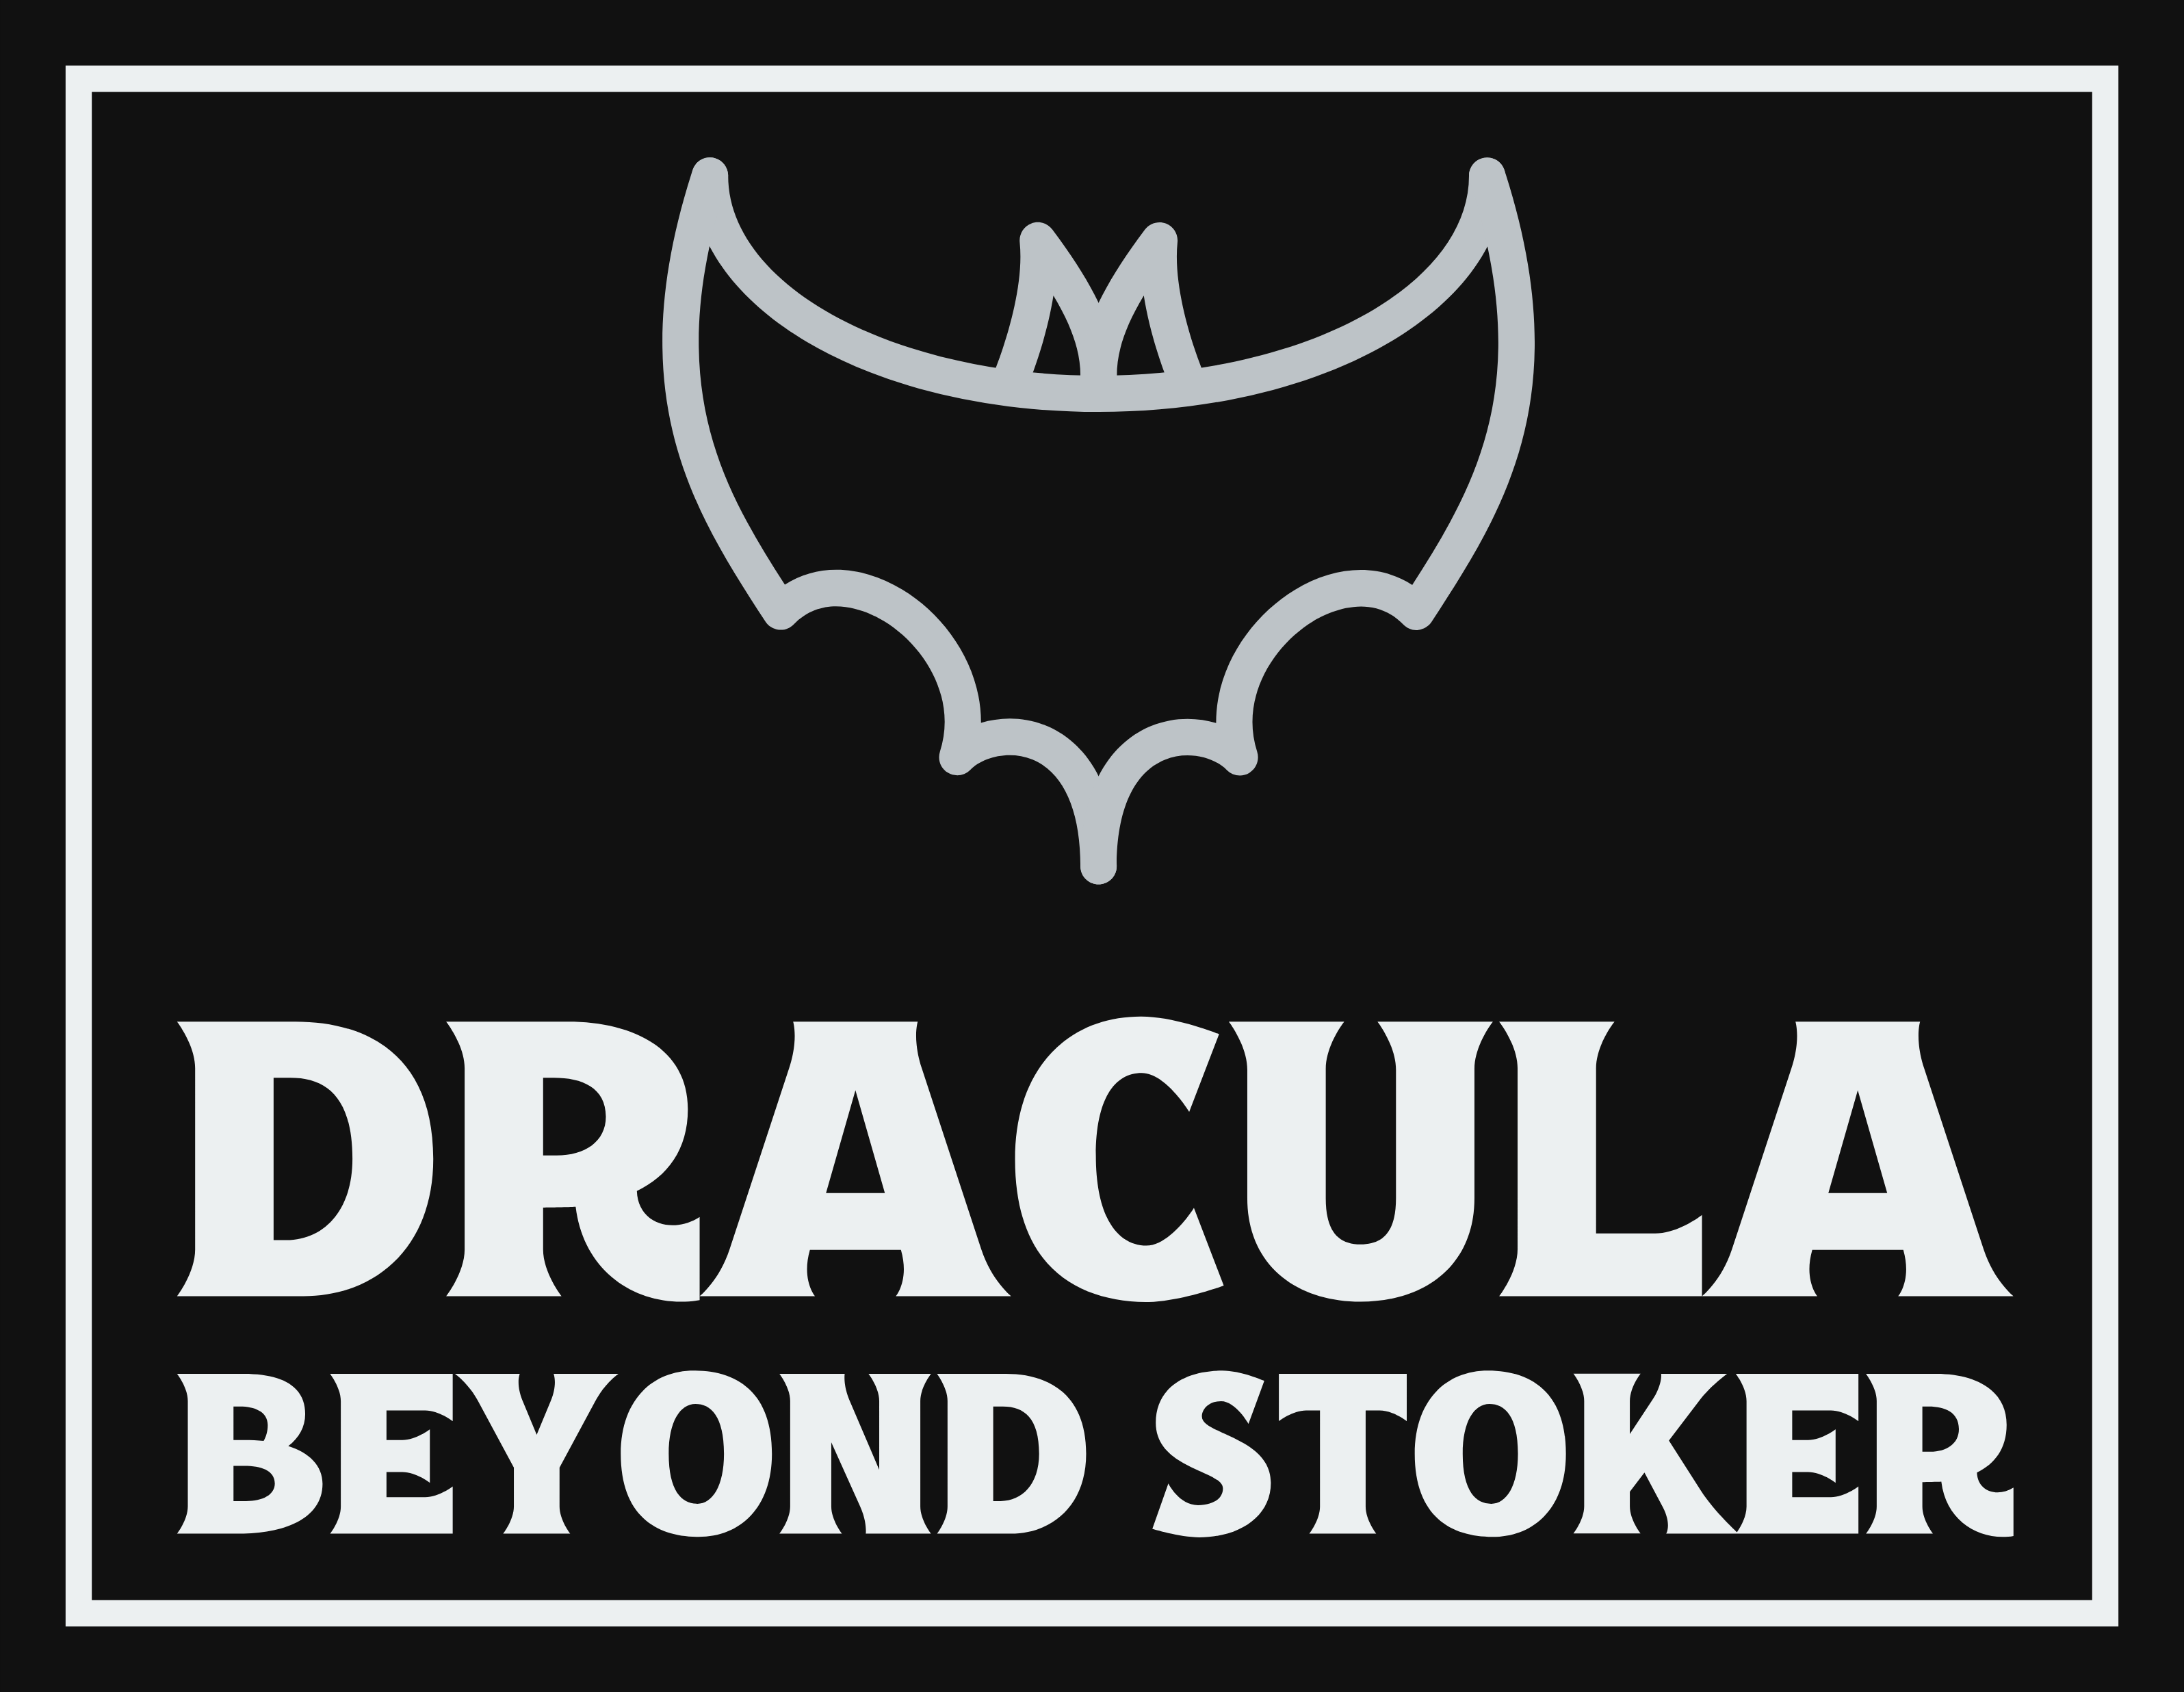 Dracula: The Journal of Jonathan Harker